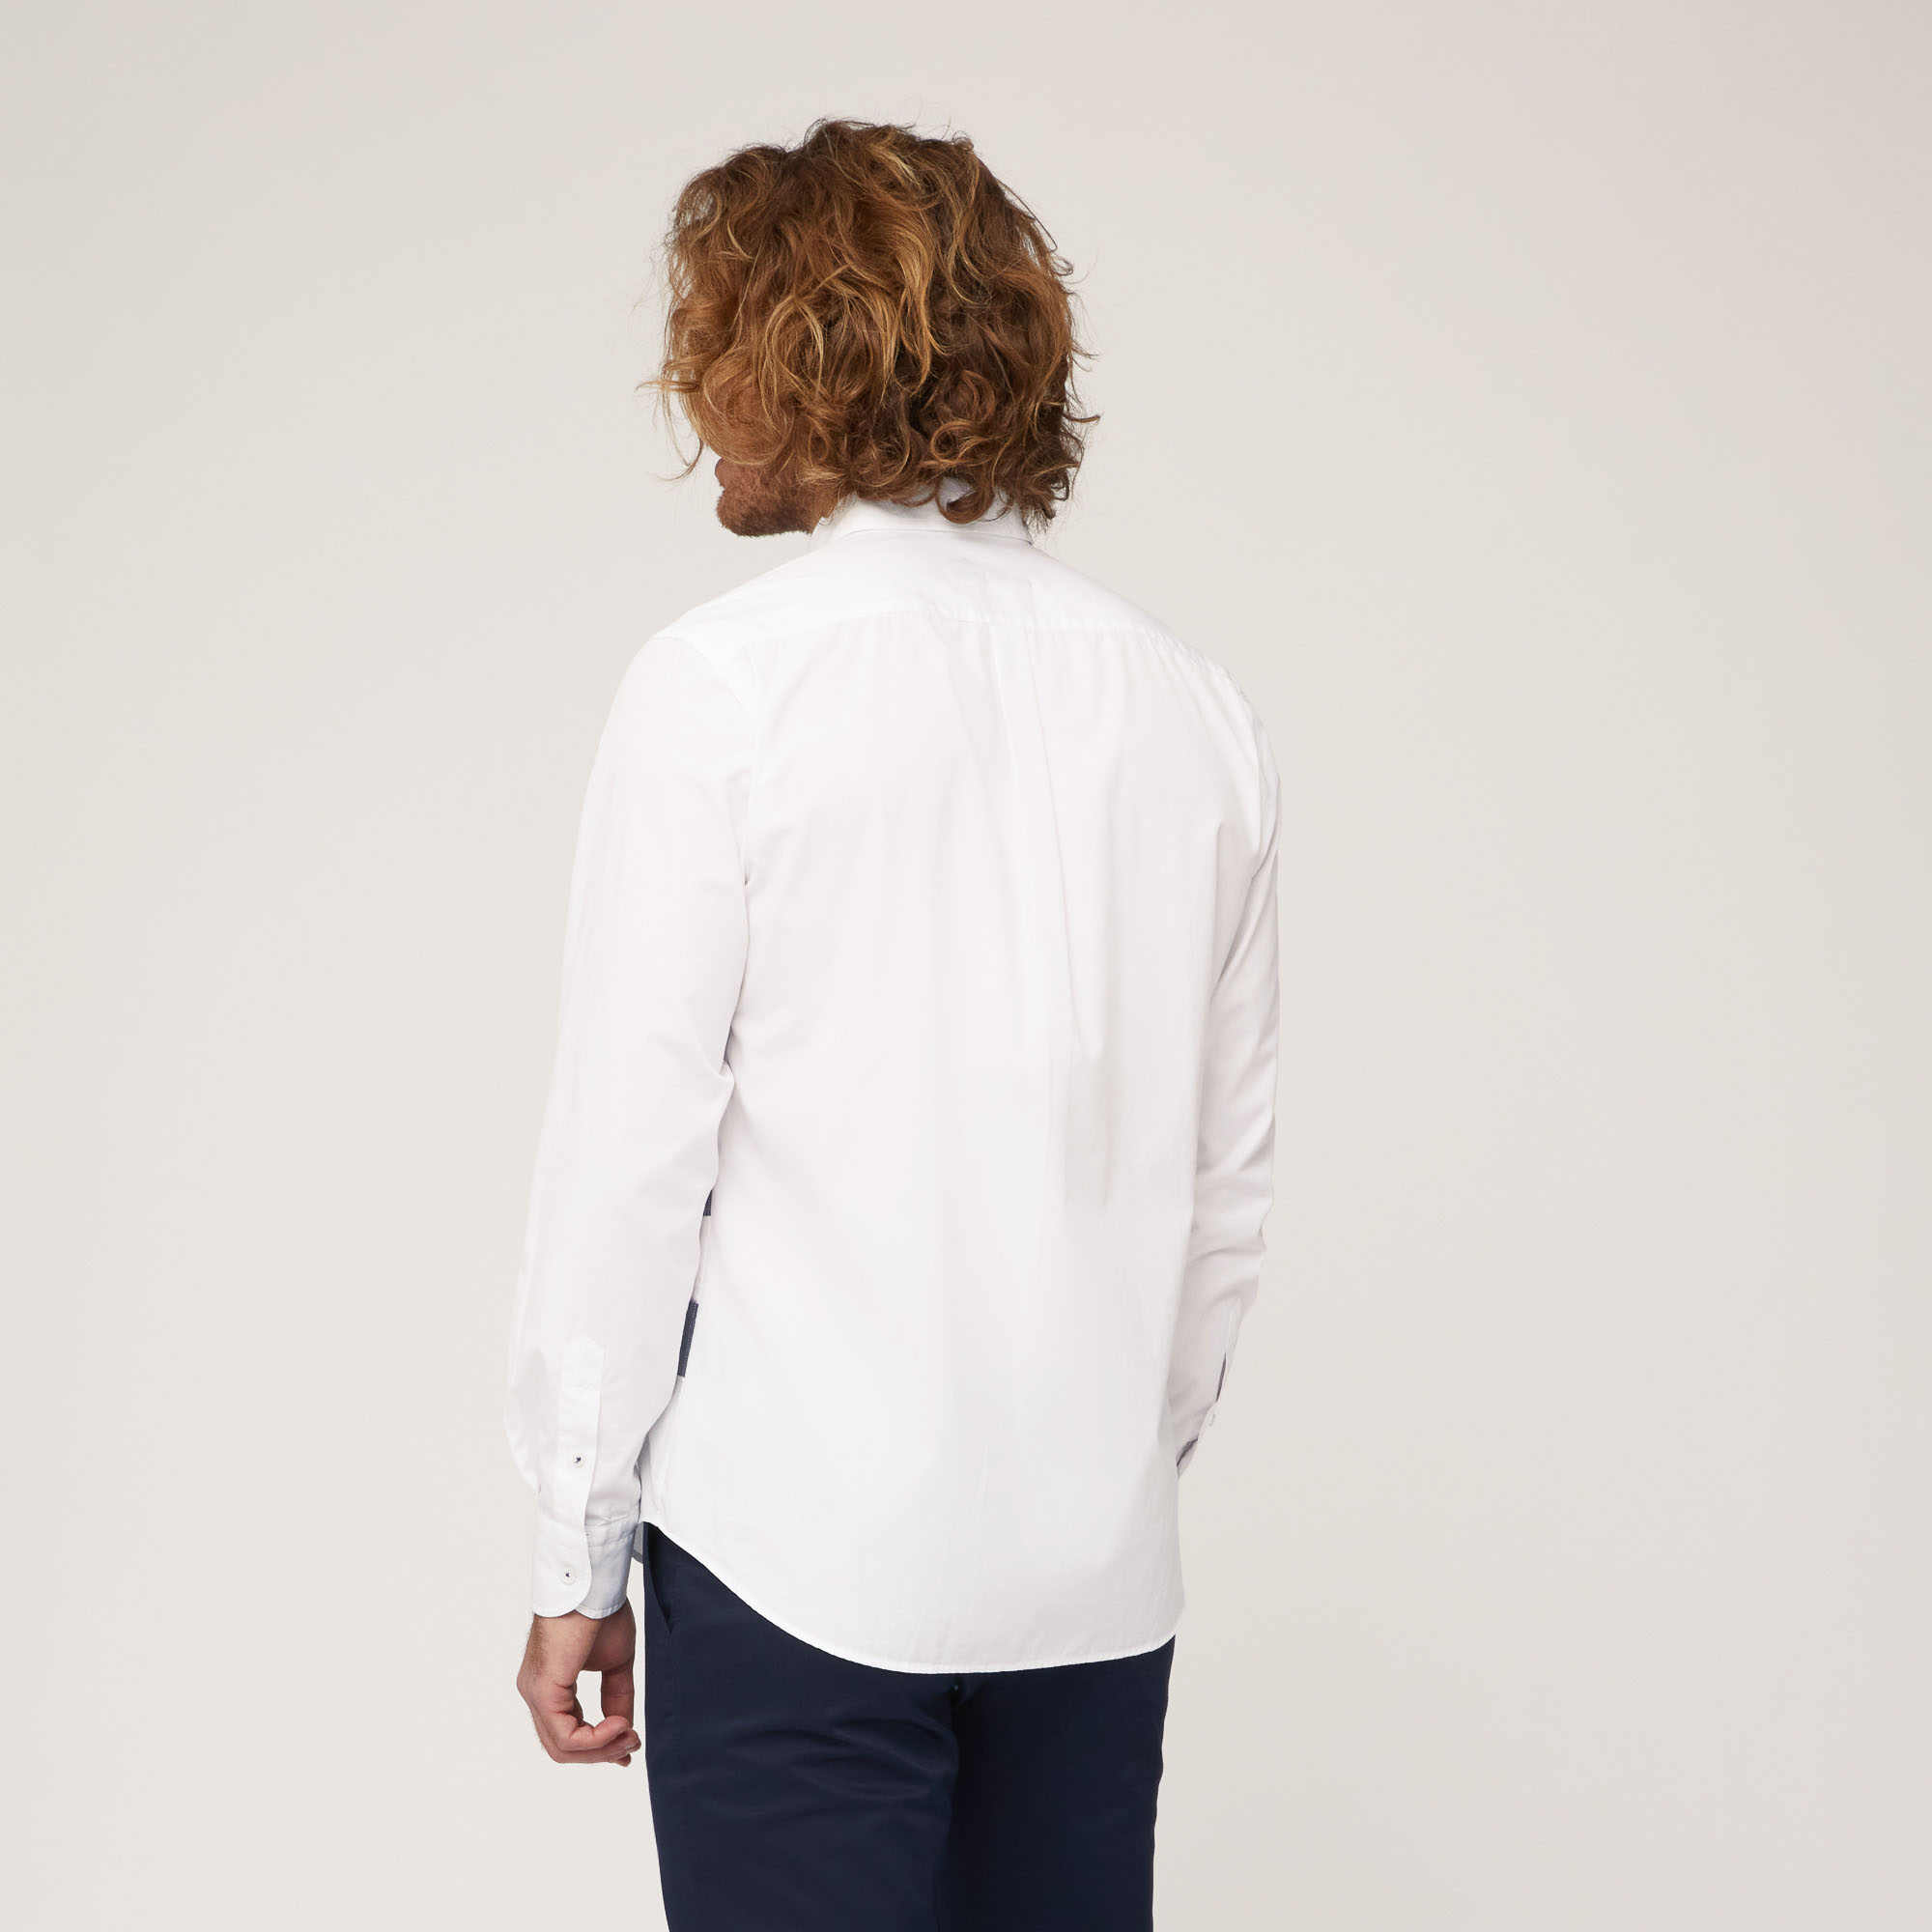 Camicia In Cotone Con Fasce Orizzontali, Bianco, large image number 1